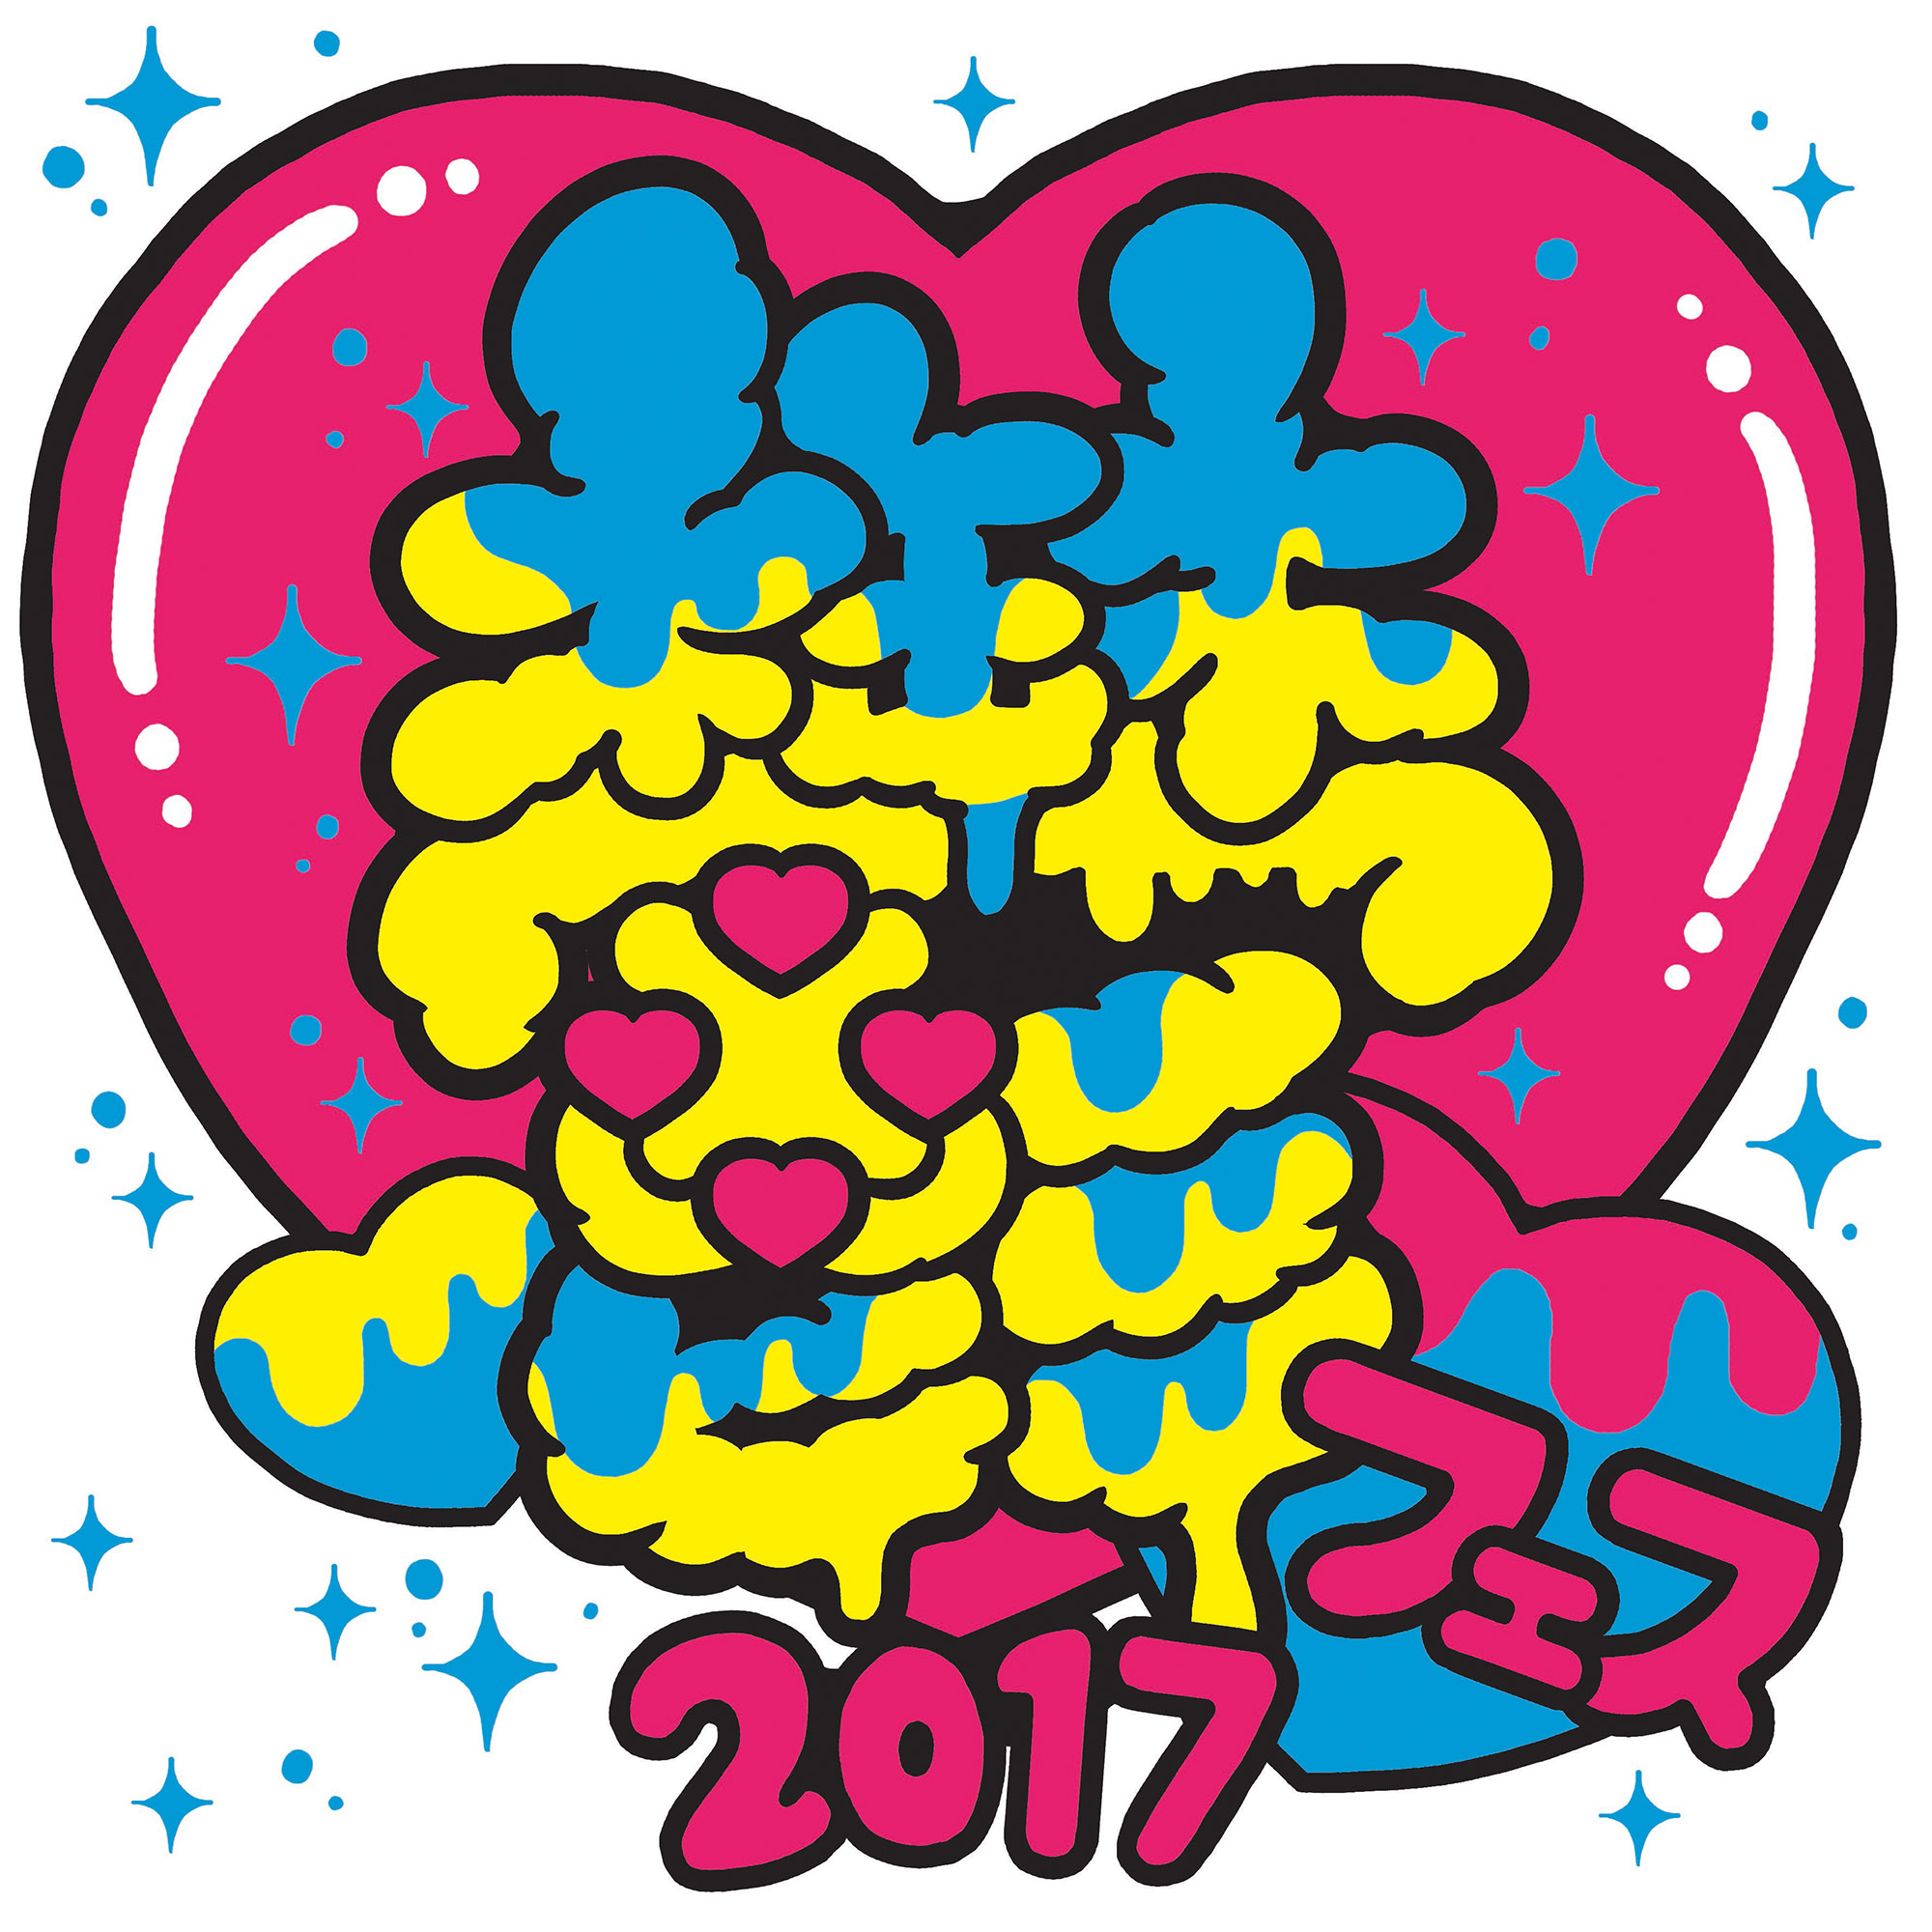 RMMS-Urbangarde-Utsu-Fes-2017-09-announce-8-logo